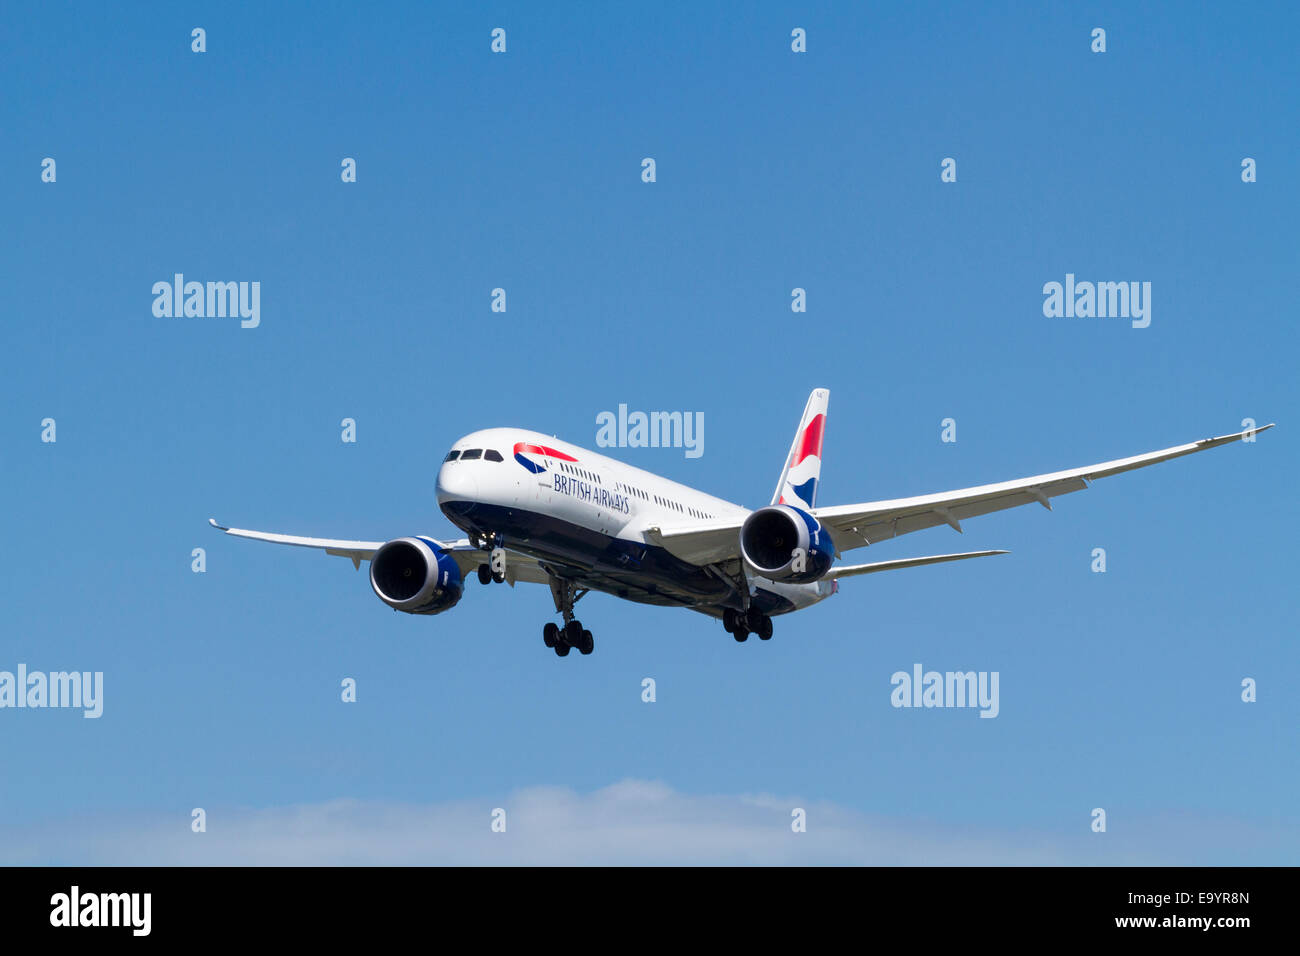 British Airways Boeing 787 plane, G-ZBJB, on landing approach at London Heathrow, England, UK Stock Photo